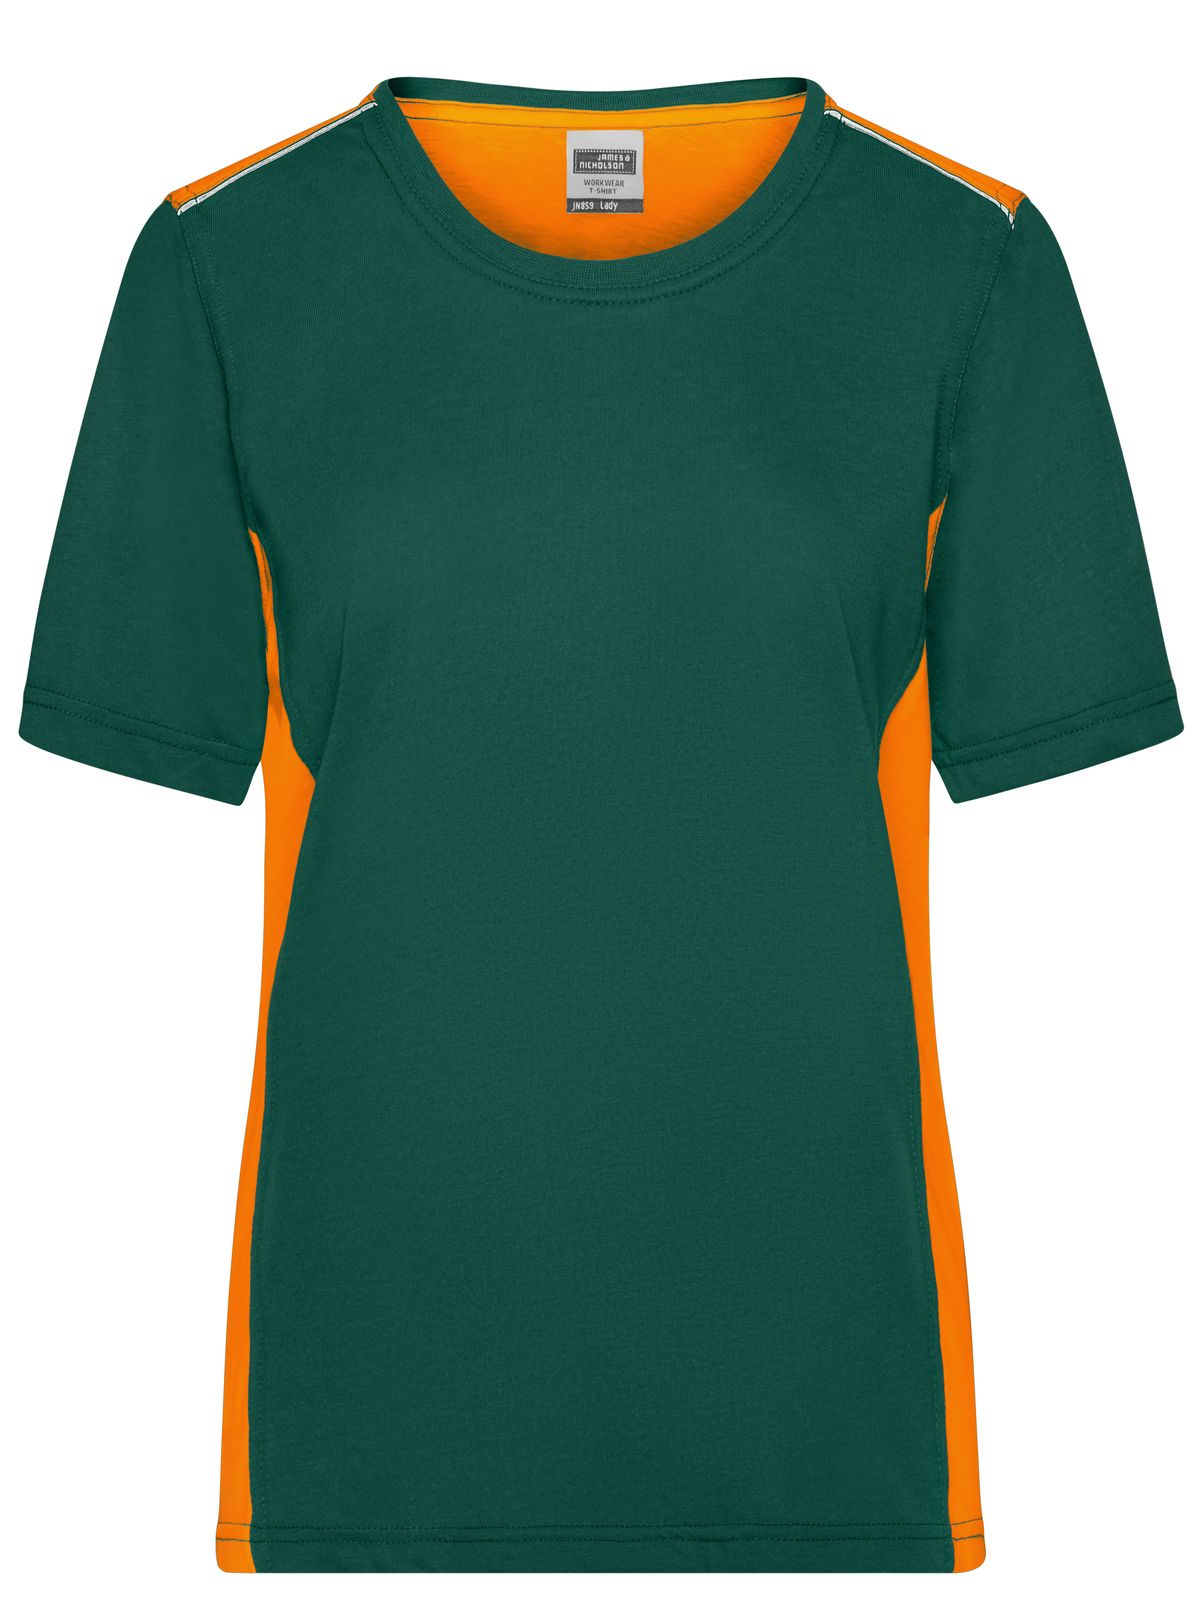 ladies-workwear-t-shirt-color-dark-green-orange.webp